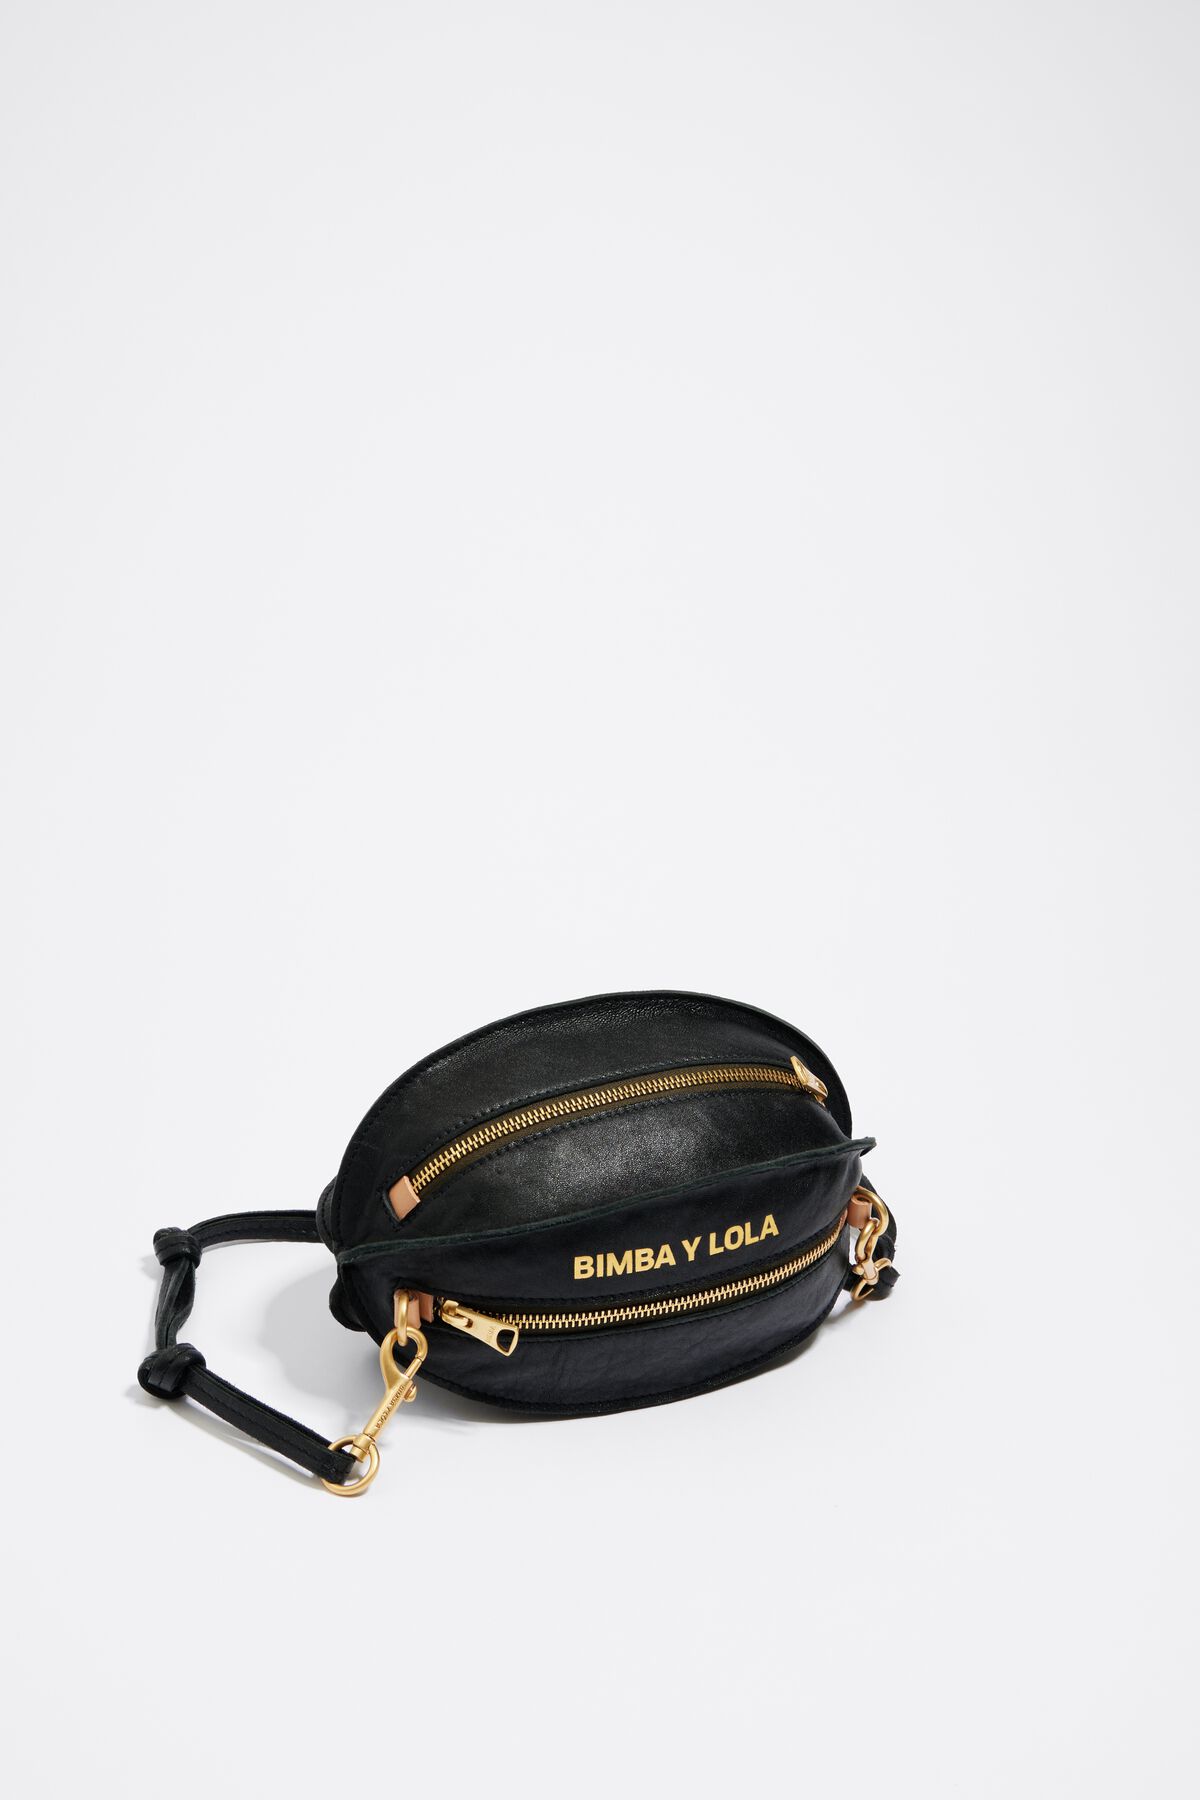 Lola Bag in Black Leather